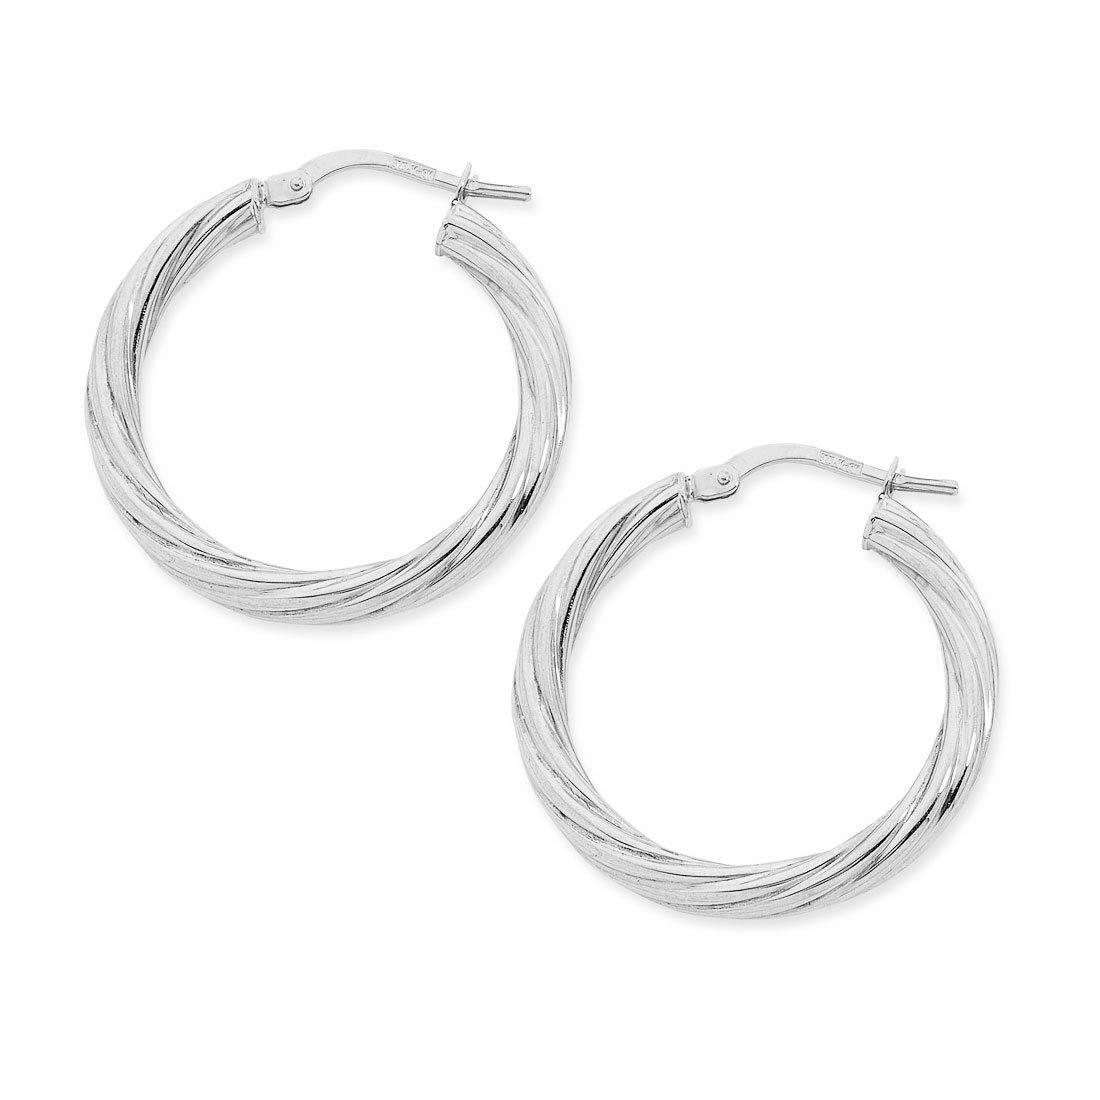 9ct White Gold Silver Infused Twist Hoop Earrings 2mm x 20mm Earrings Bevilles 